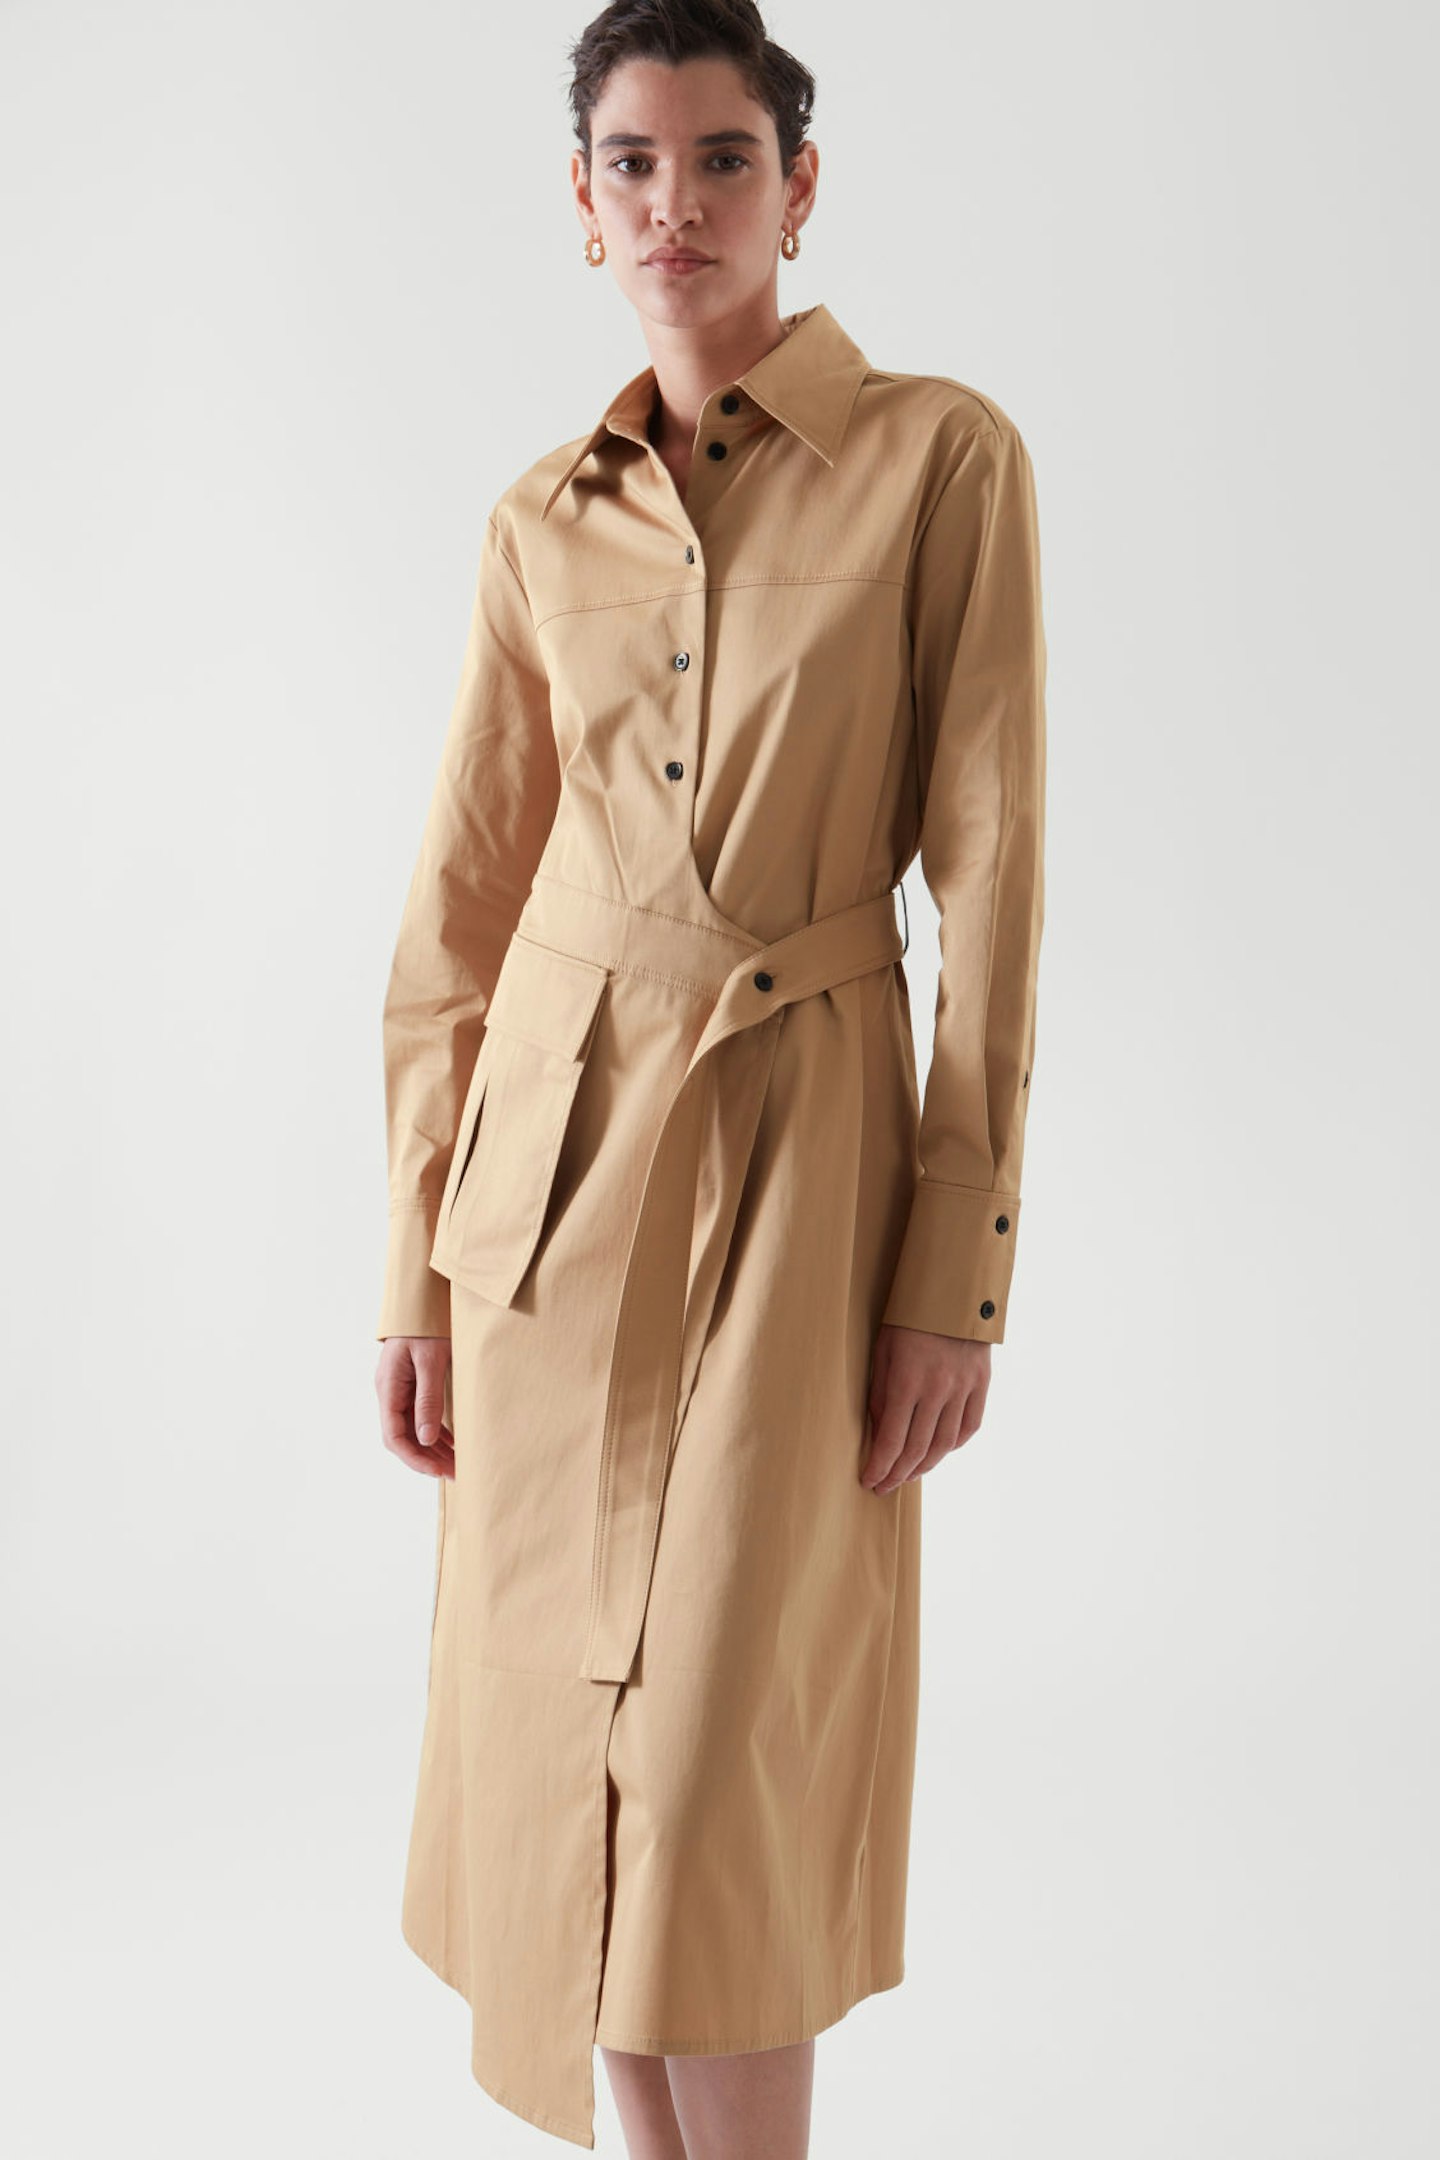 COS, Belted Shirt Dress, £79